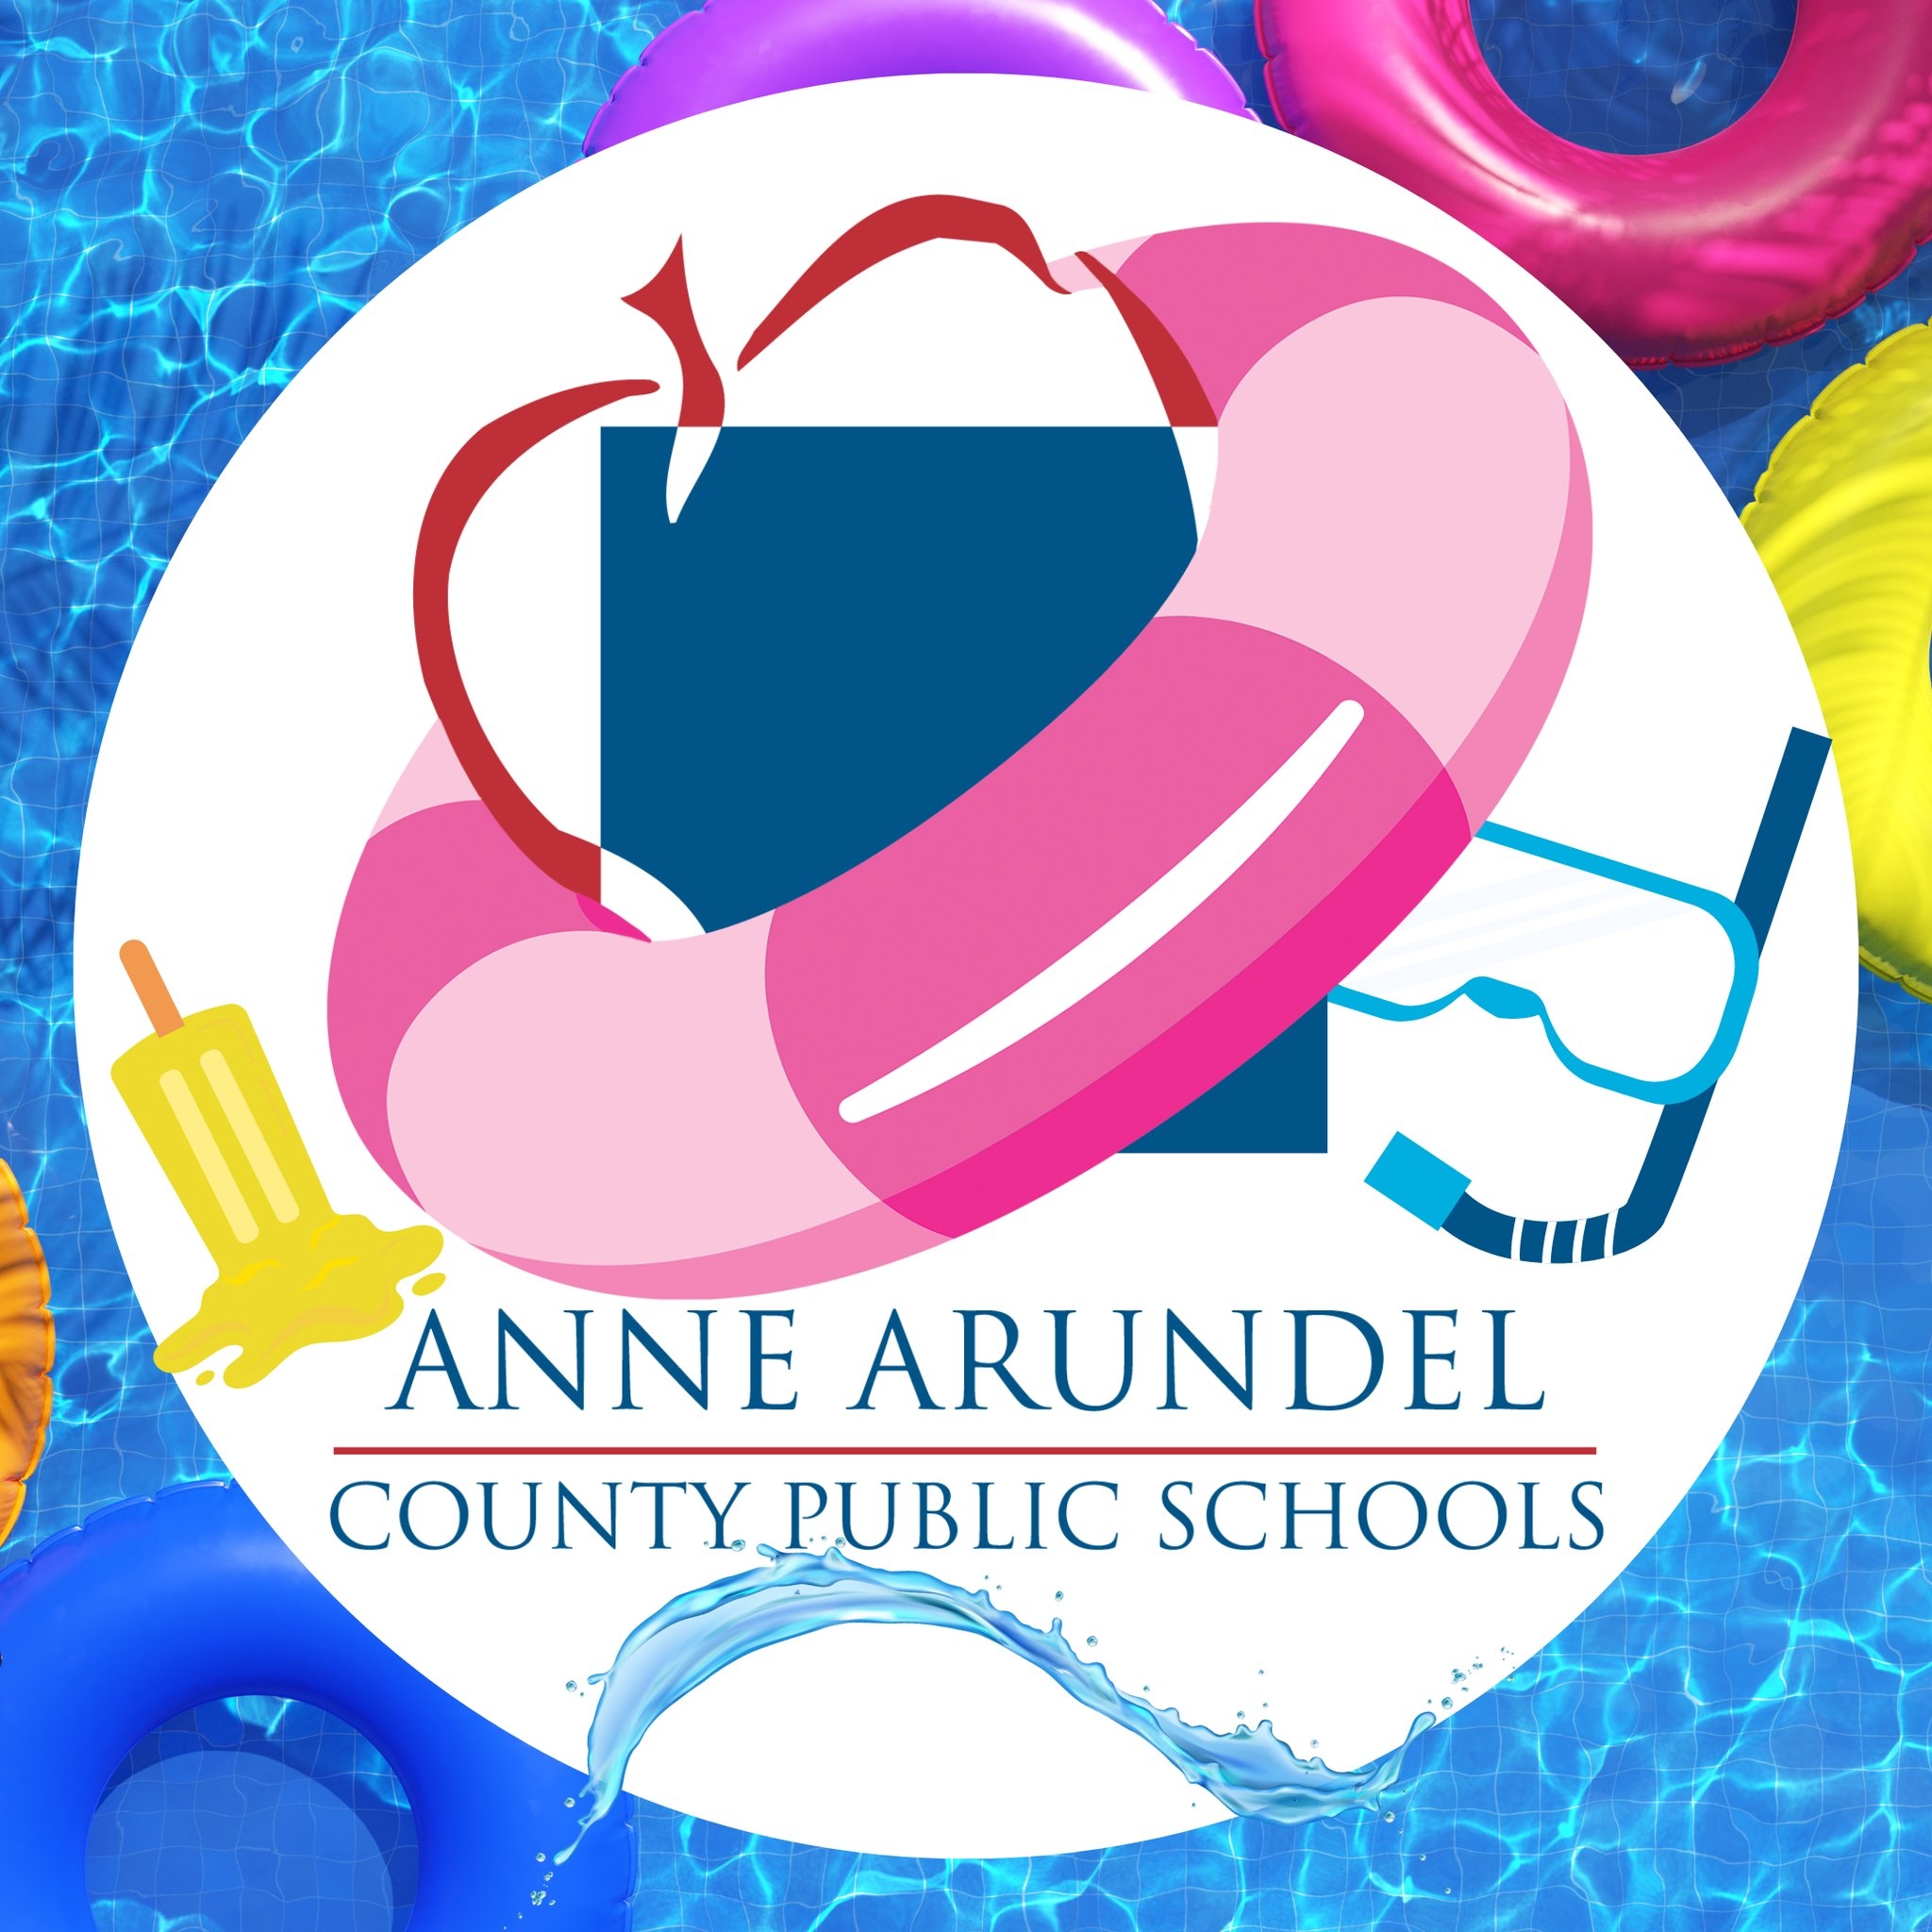 ANNE ARUNDEL COUNTY PUBLIC SCHOOLS